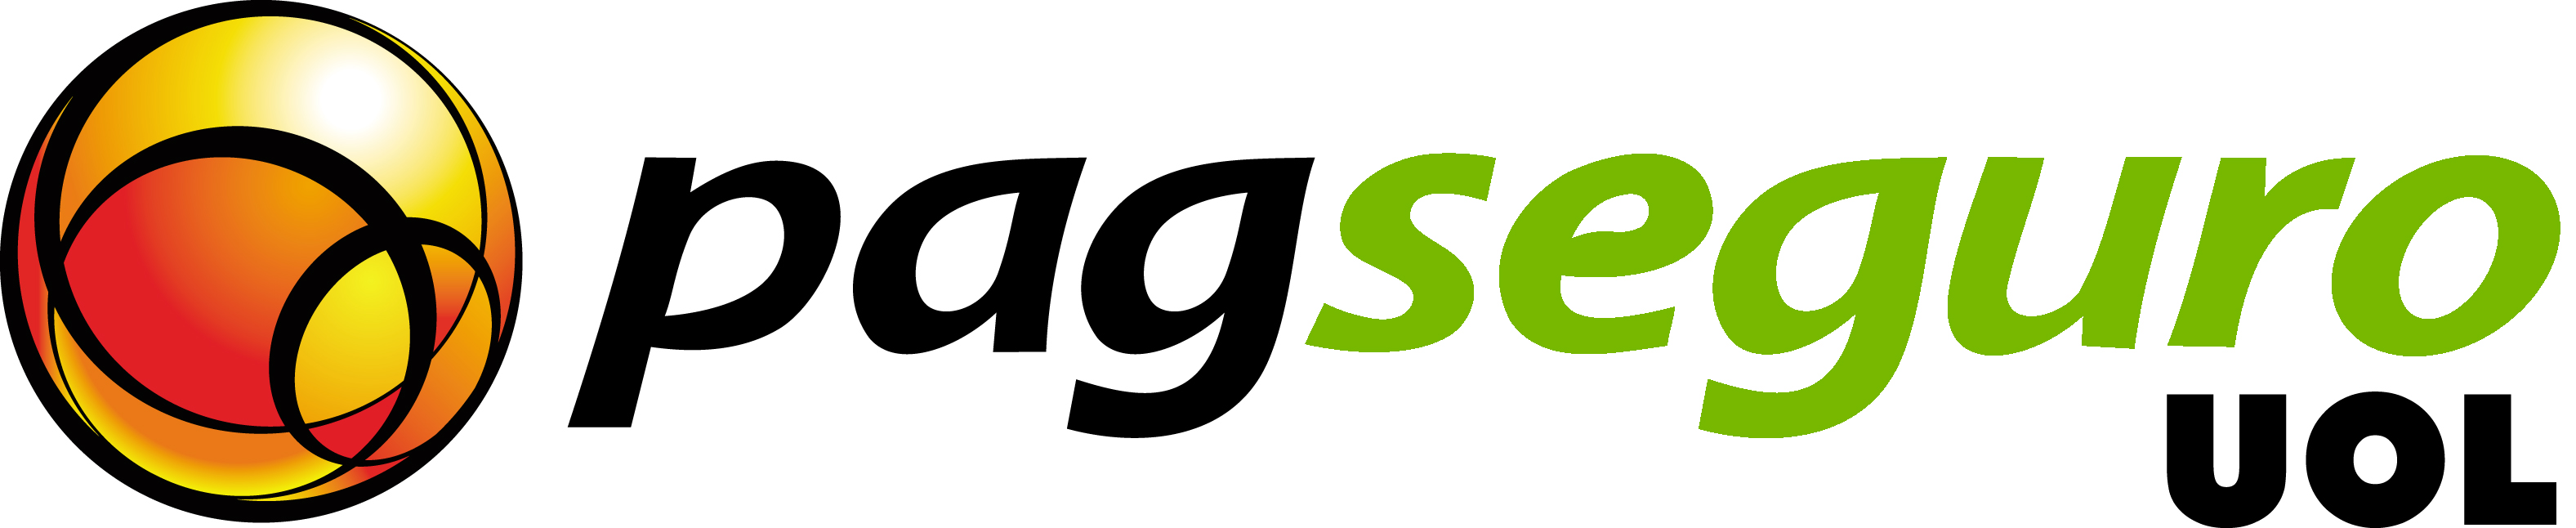 Pagseguro Logo.